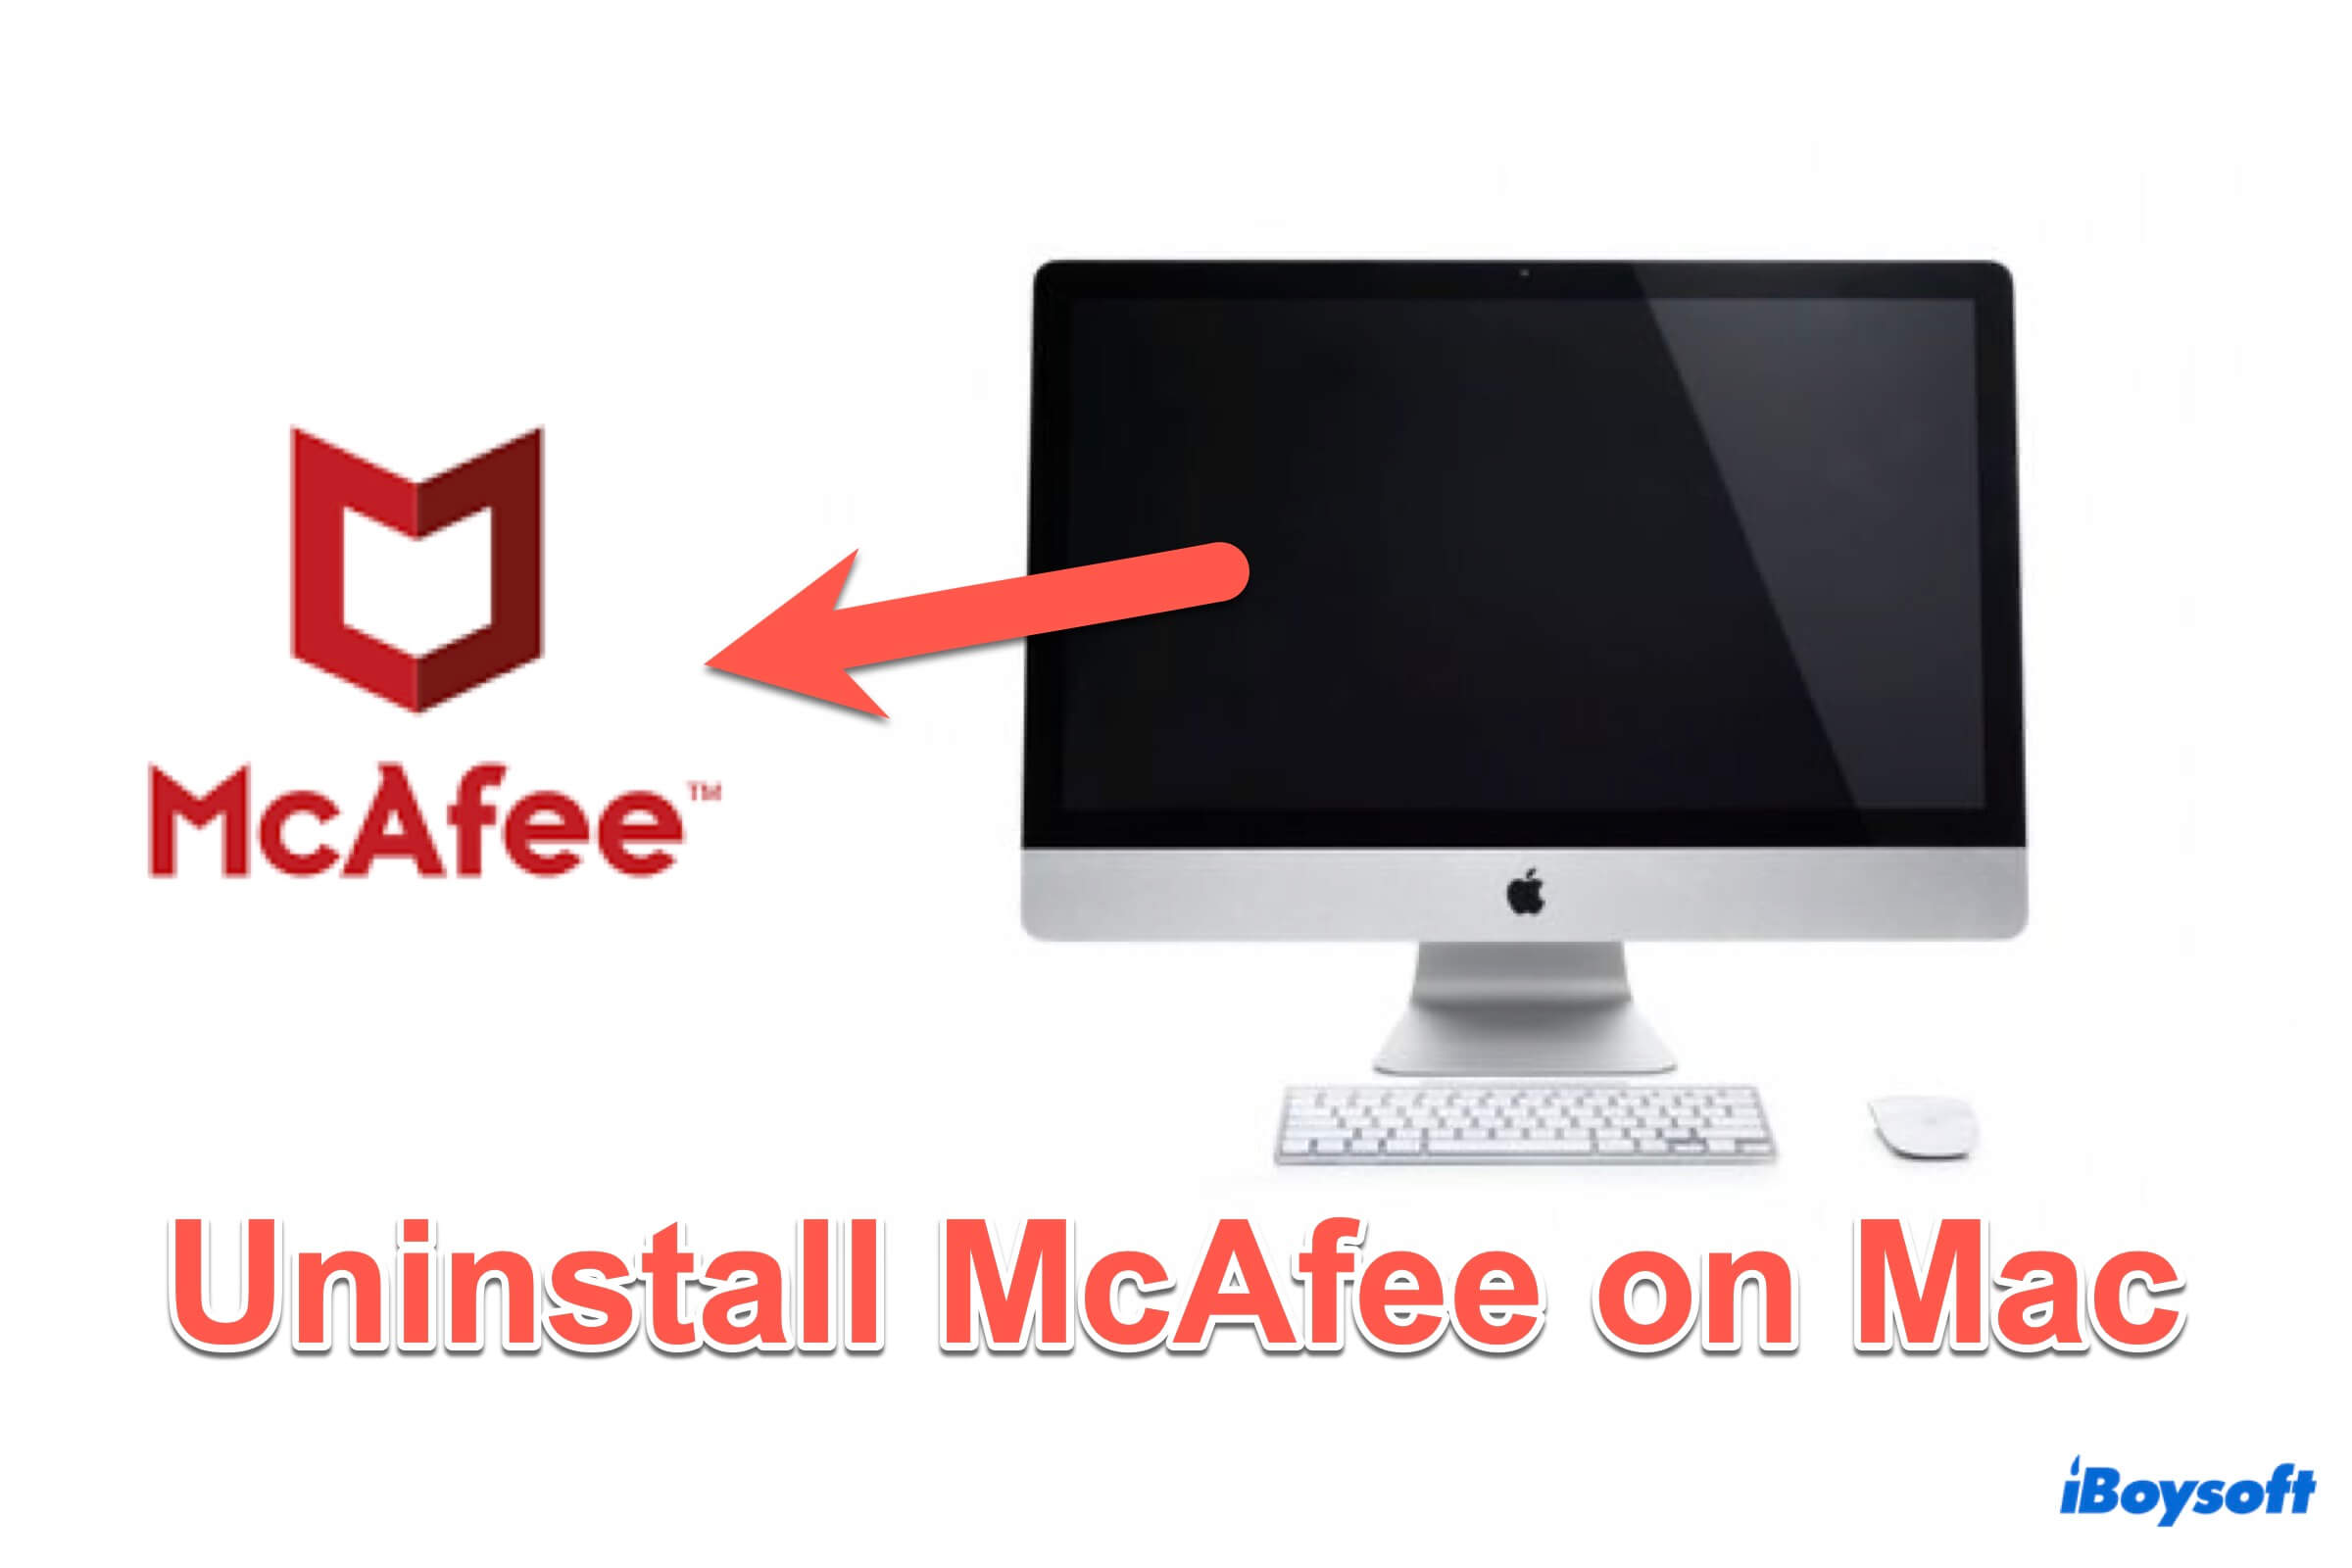 Summary of Uninstall McAfee on Mac